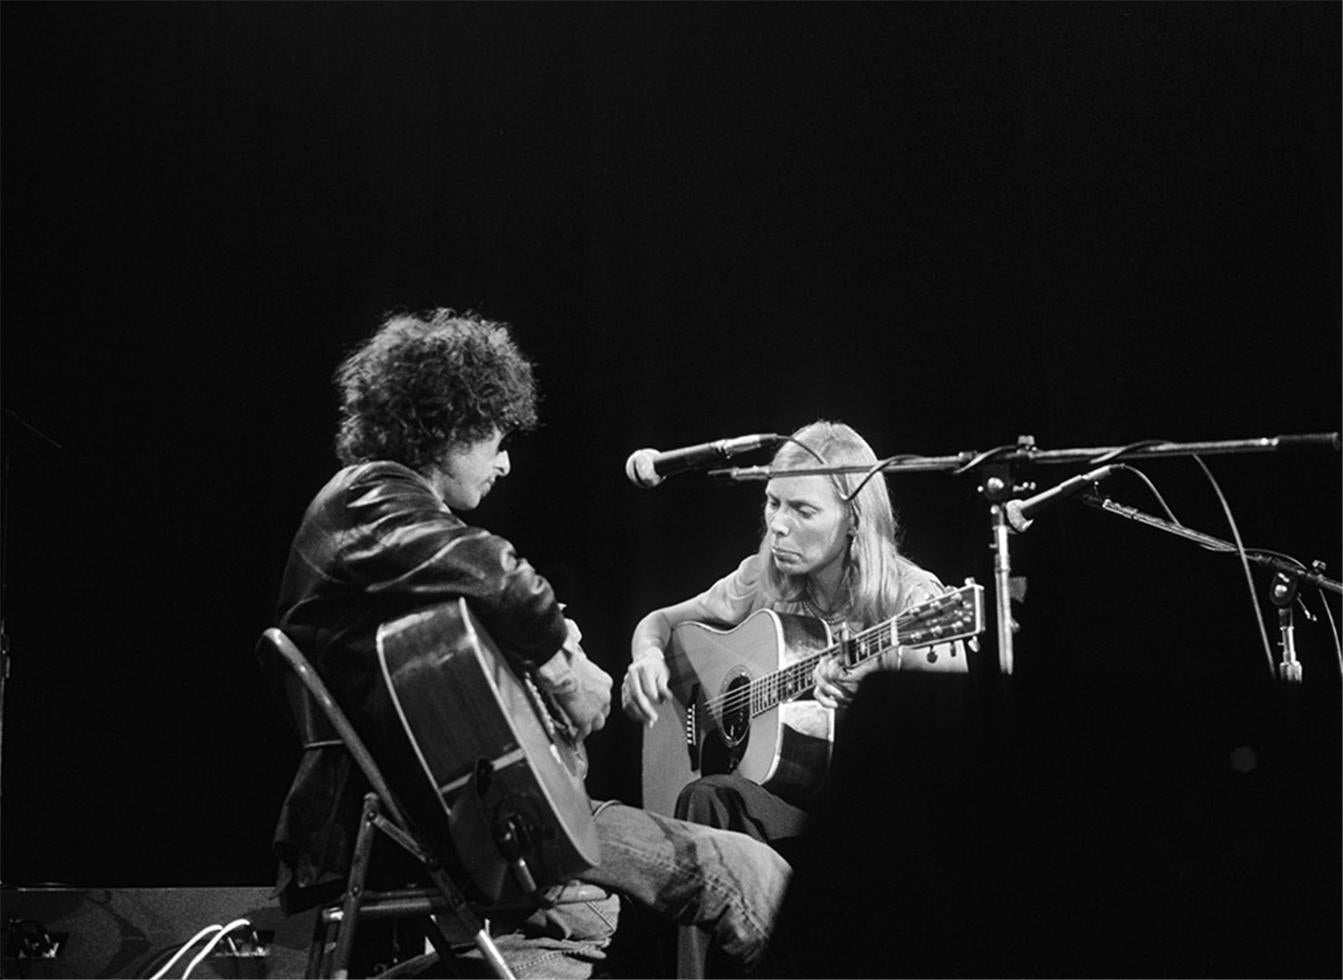  Charlyn Zlotnik Black and White Photograph - Bob Dylan and Joni Mitchell, 1976